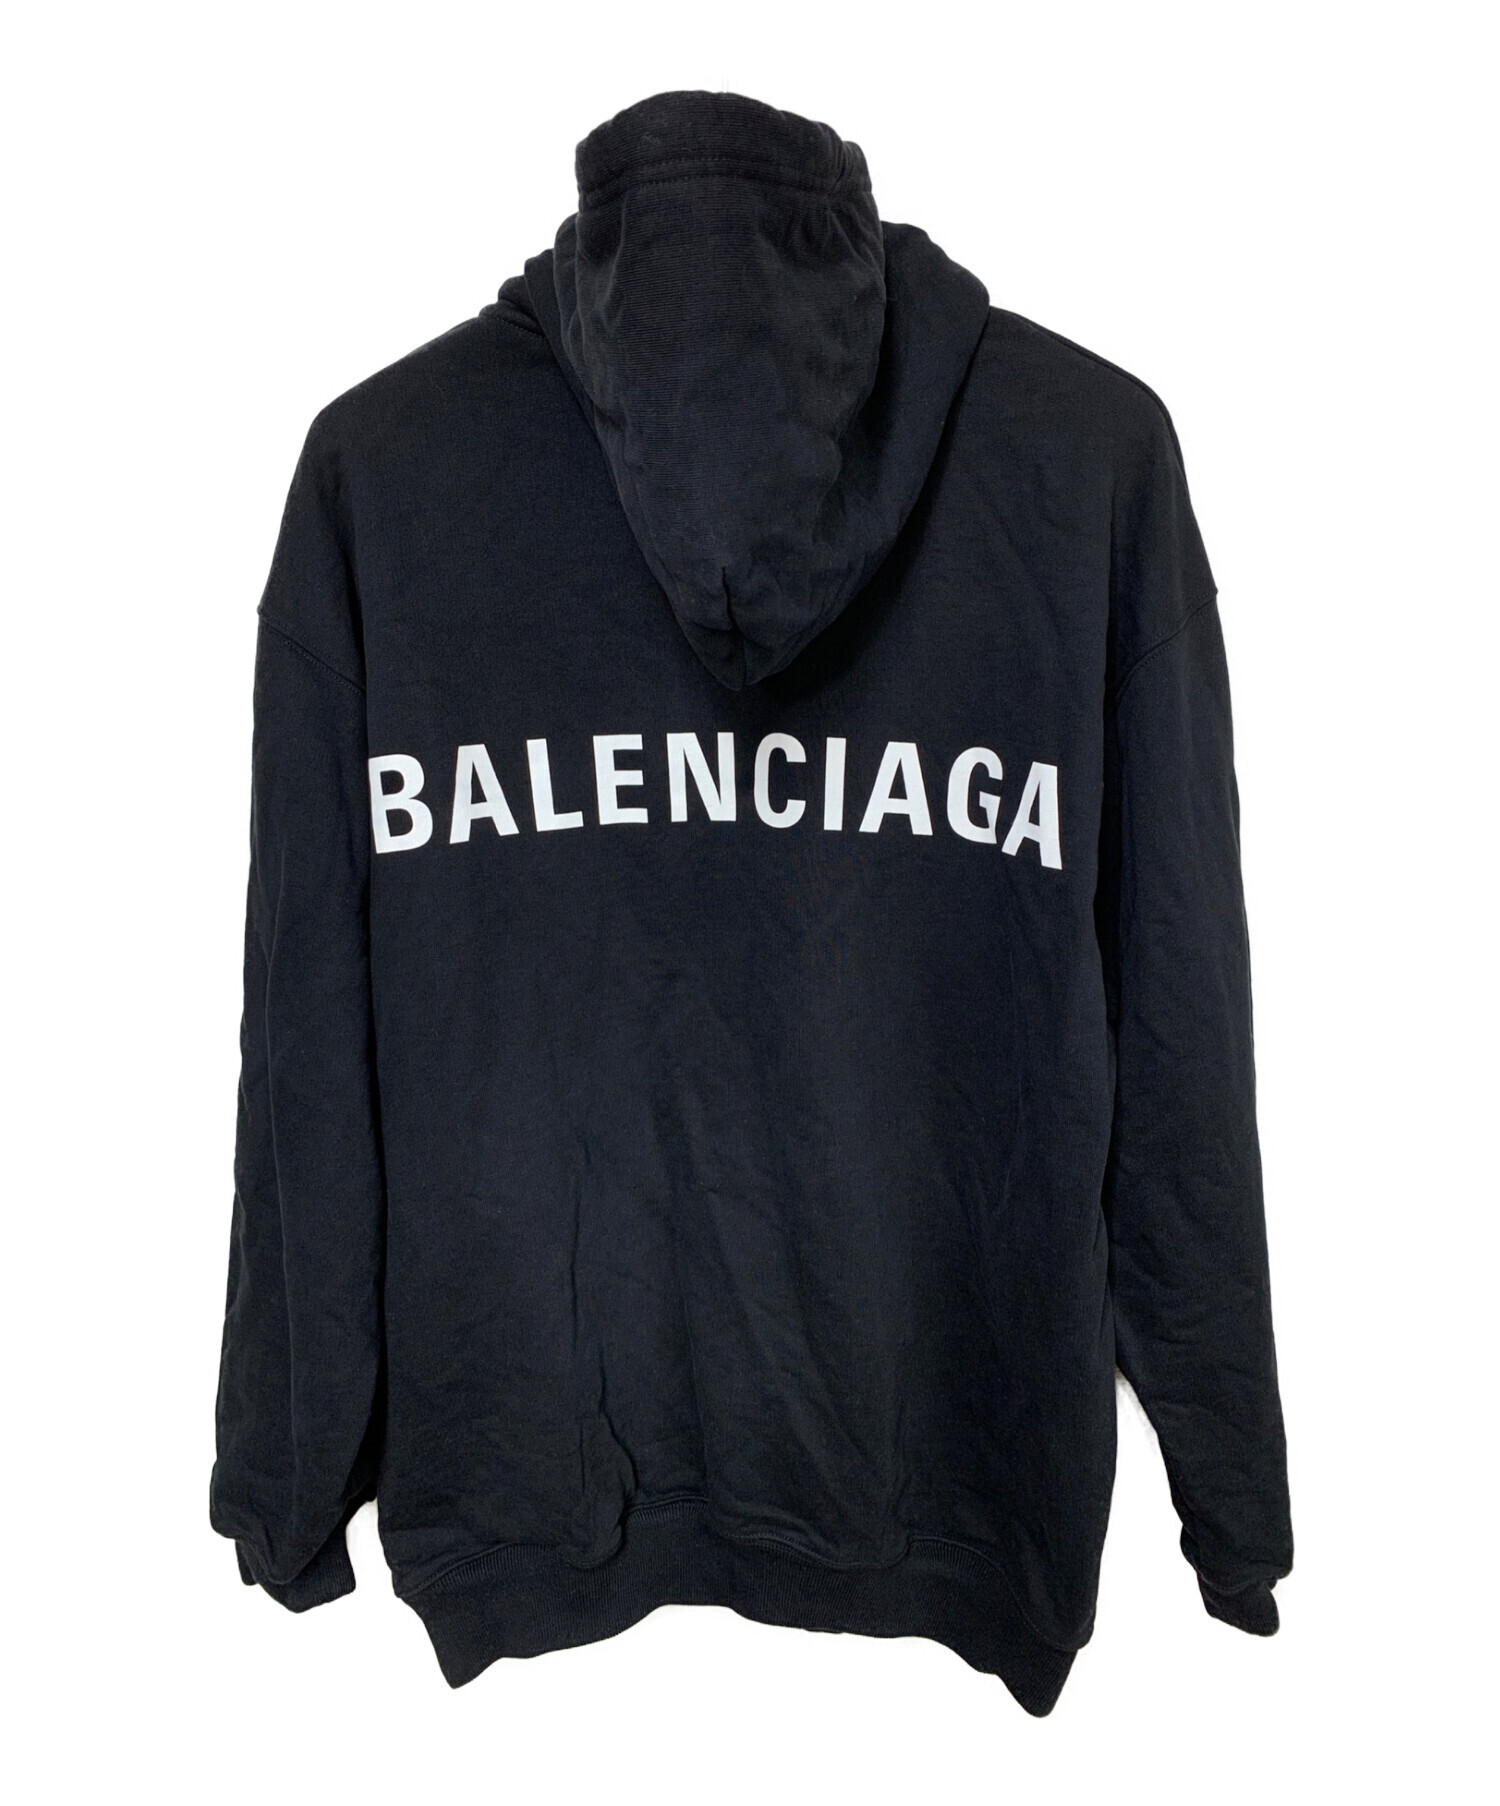 BALENCIAGA (バレンシアガ) バックロゴプルオーバーパーカー ブラック サイズ:size M